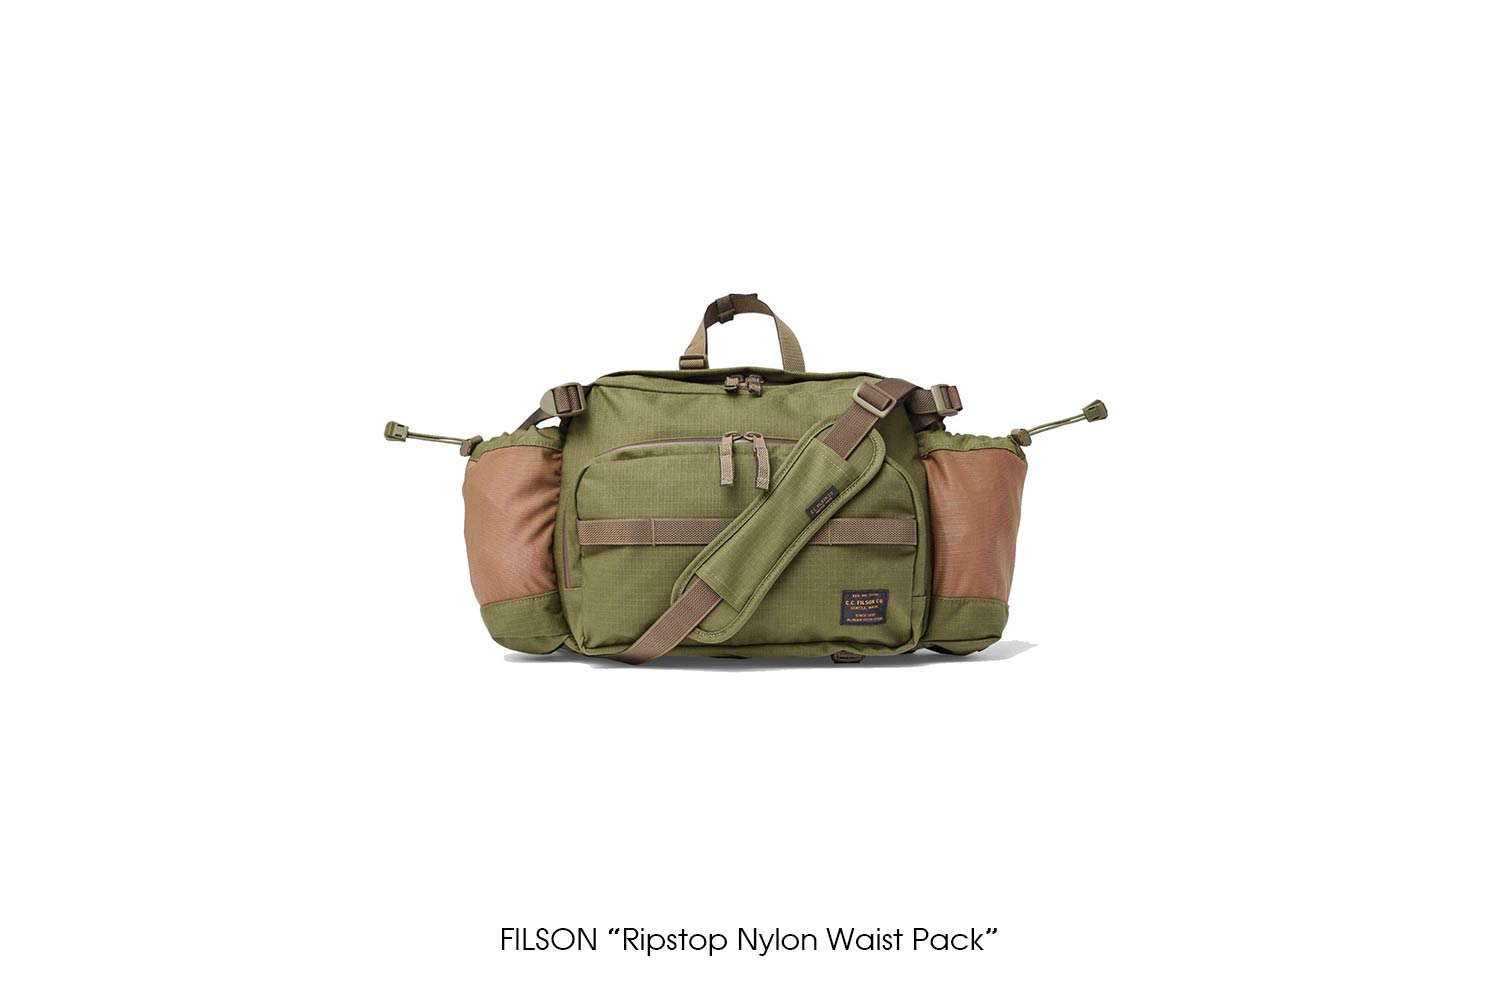 FILSON "Ripstop Nylon Waist Pack"